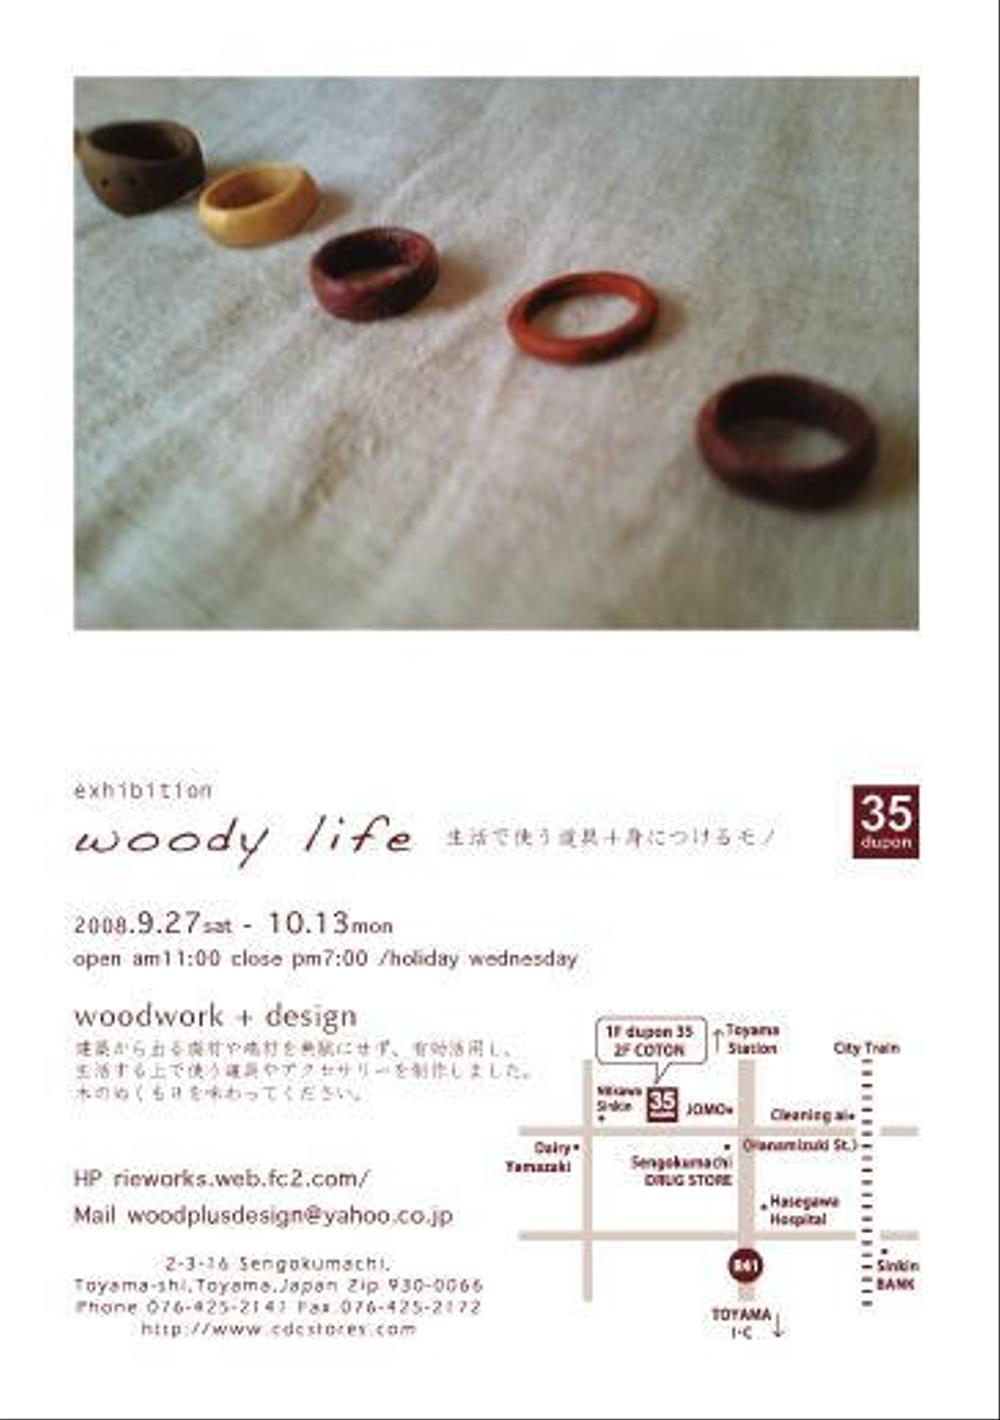 exhibition woody life 生活で使う道具＋身につけるモノ